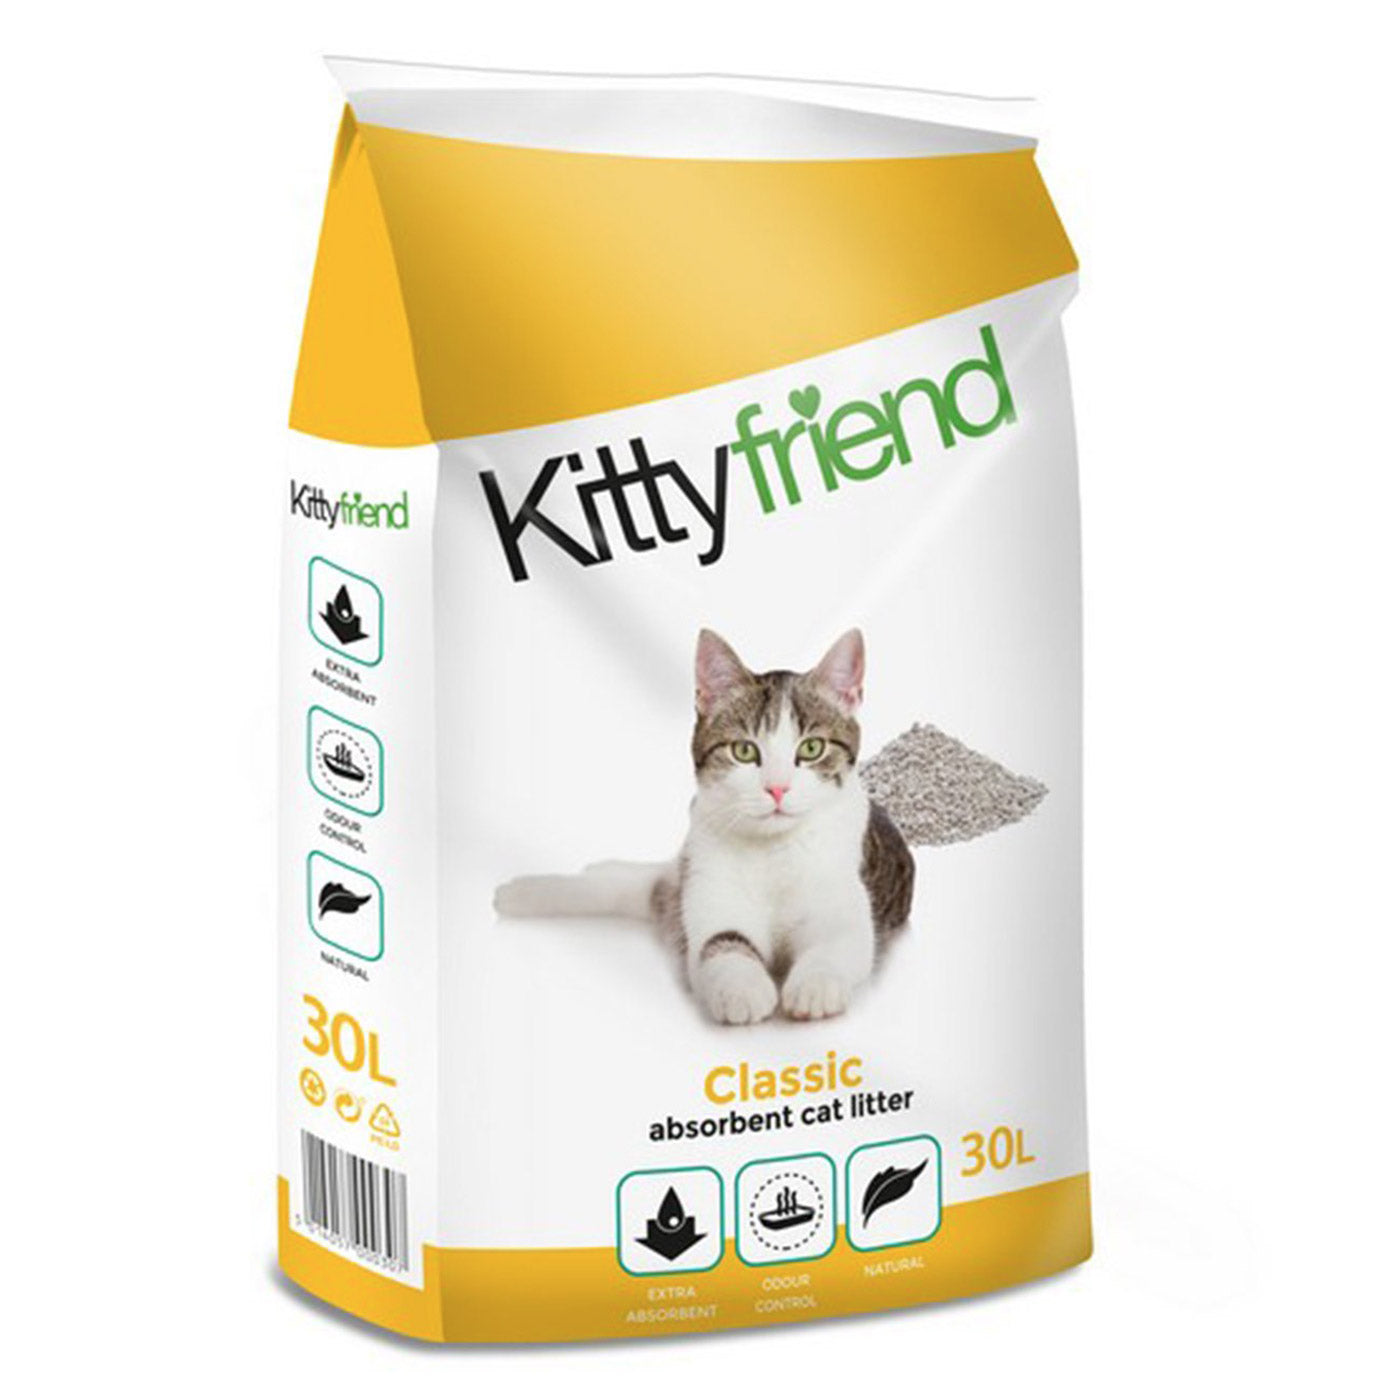 KittyFriend Classic Absorbent Cat Litter 30L